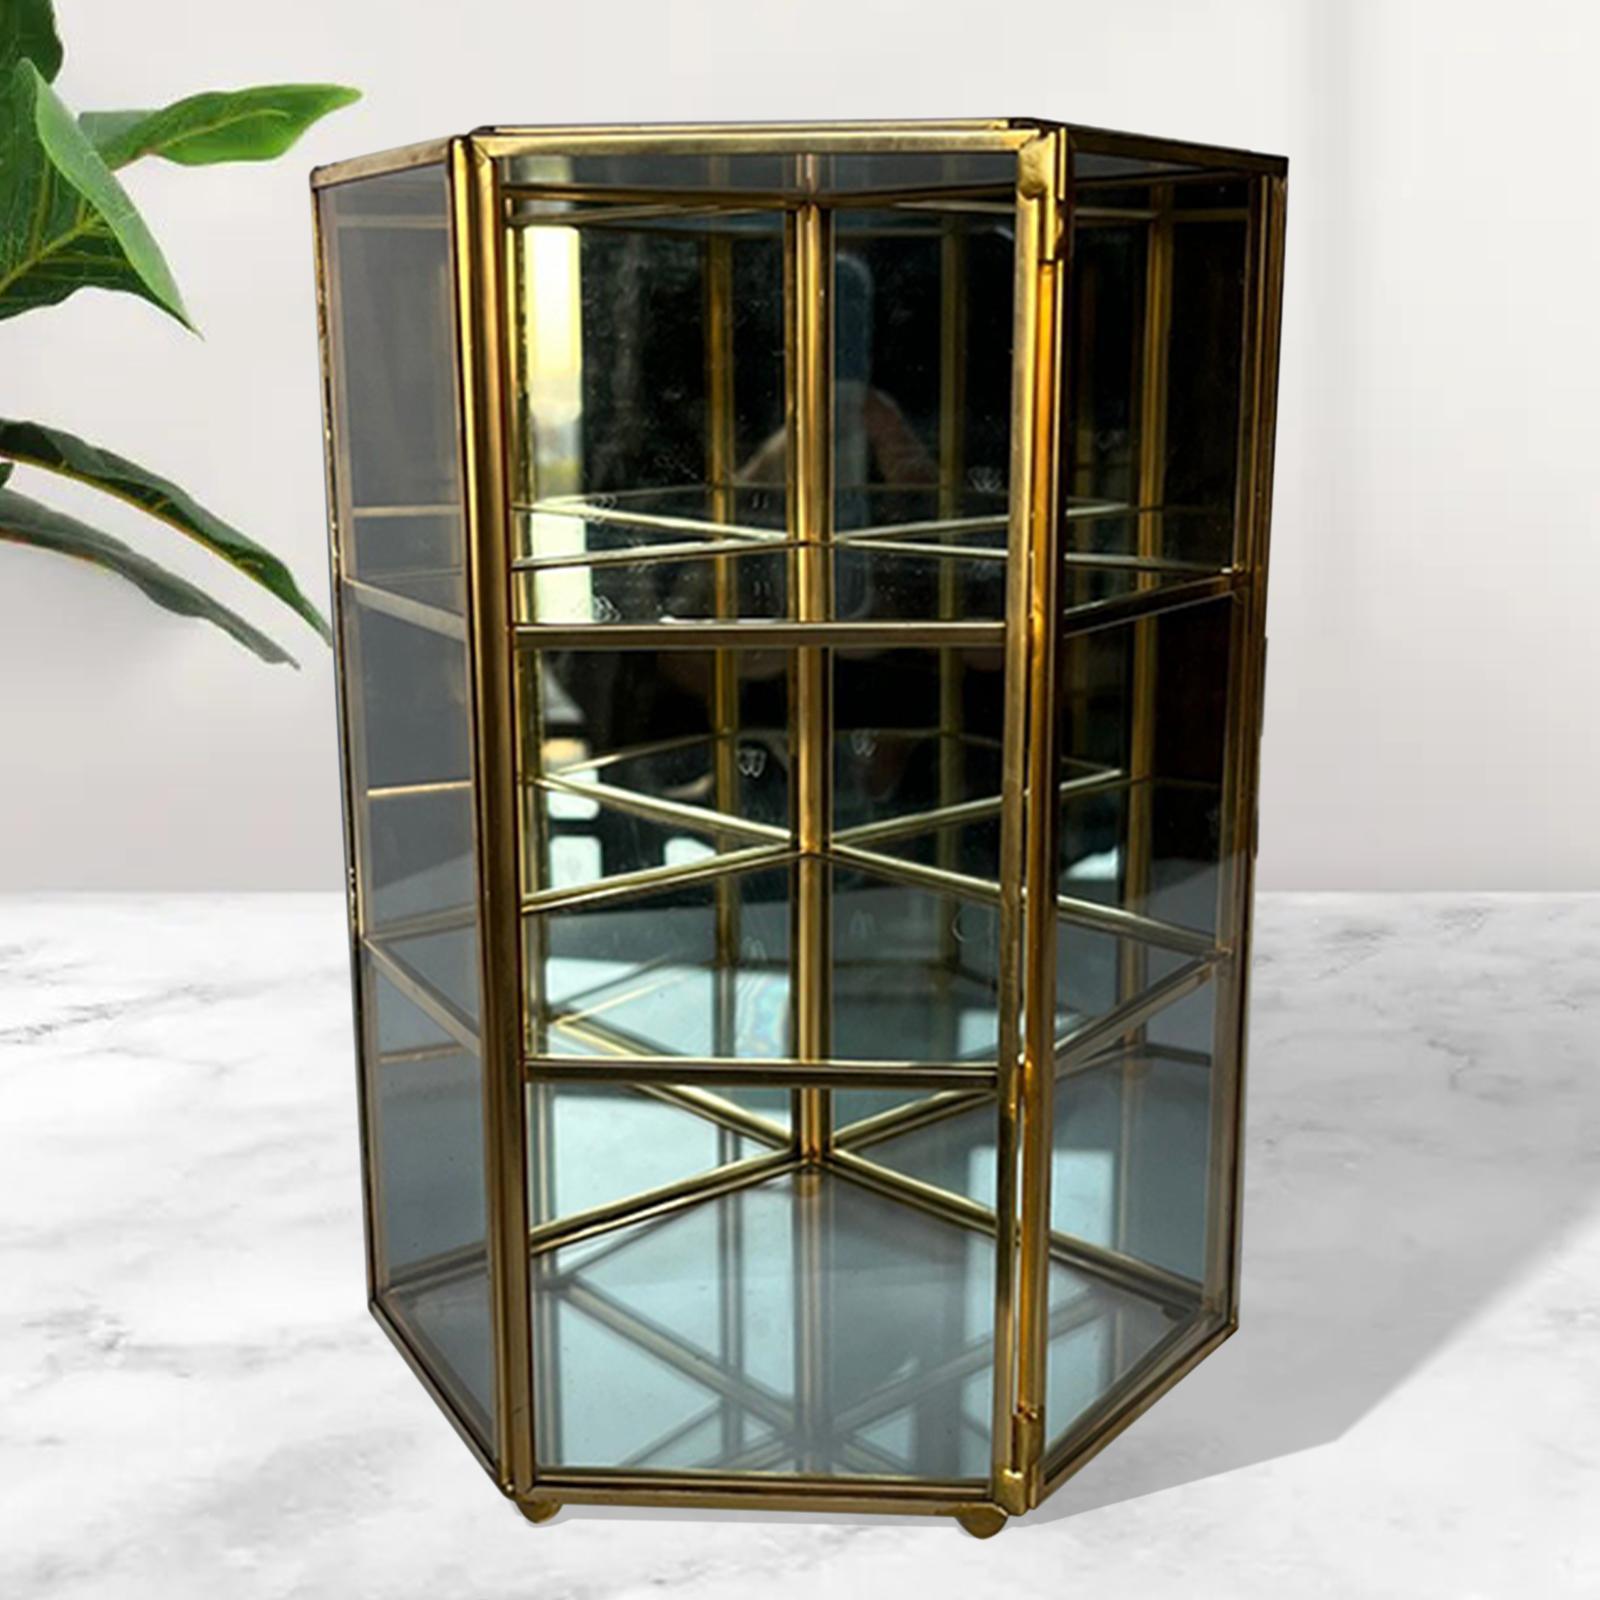 Golden Display Jewelry Box Organizer Dustproof Holder Mirrored